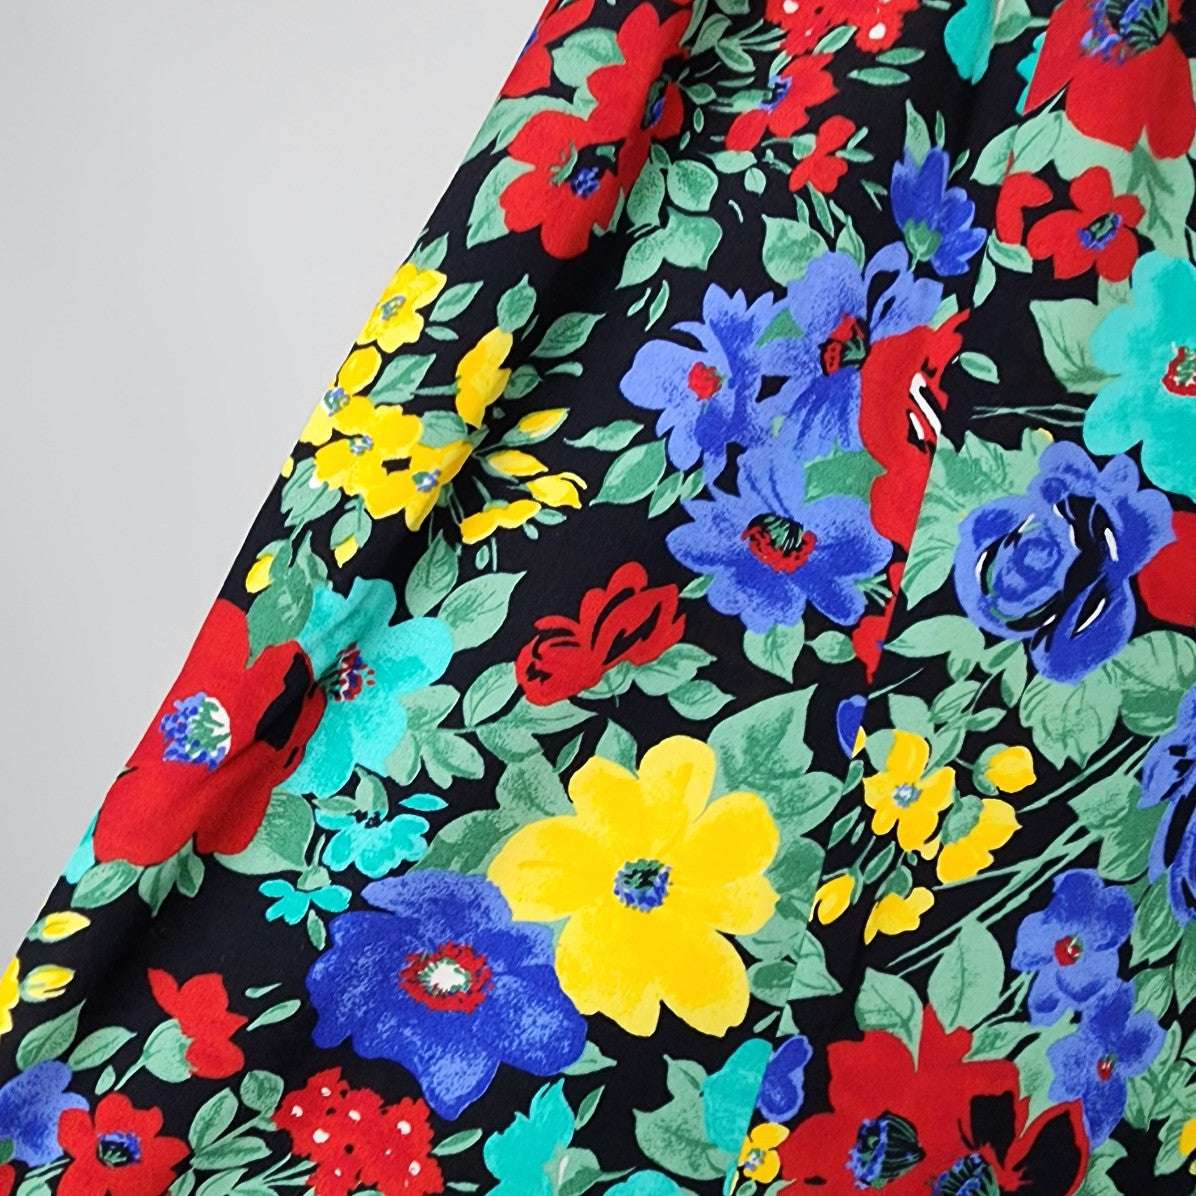 Principles Colorful Floral Midi Skirt Size S/M